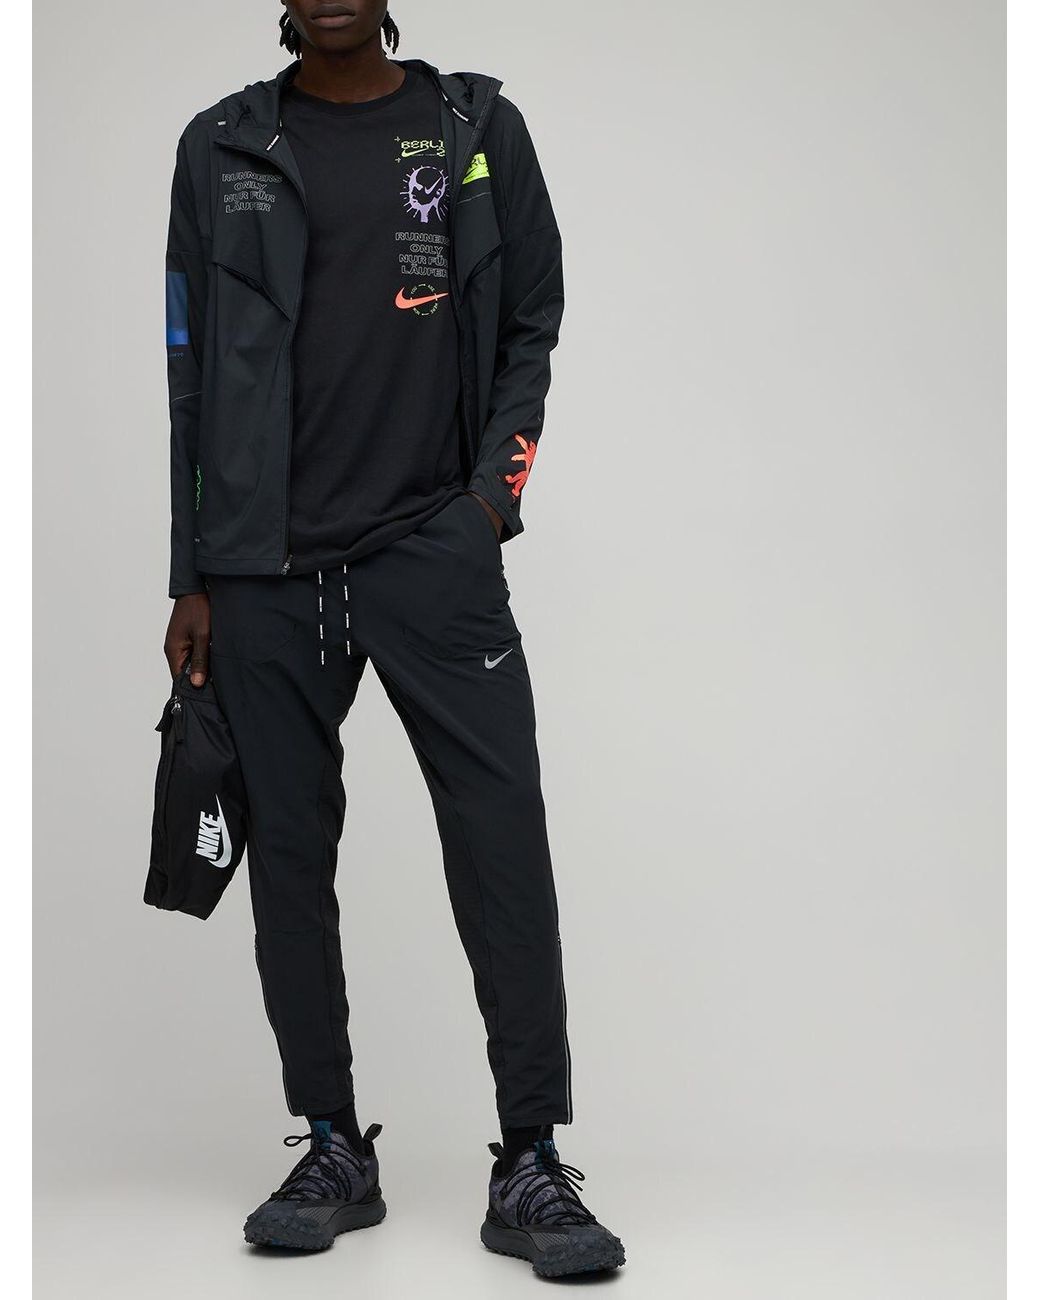 Nike Dri-fit Berlin T-shirt in Black for Men | Lyst